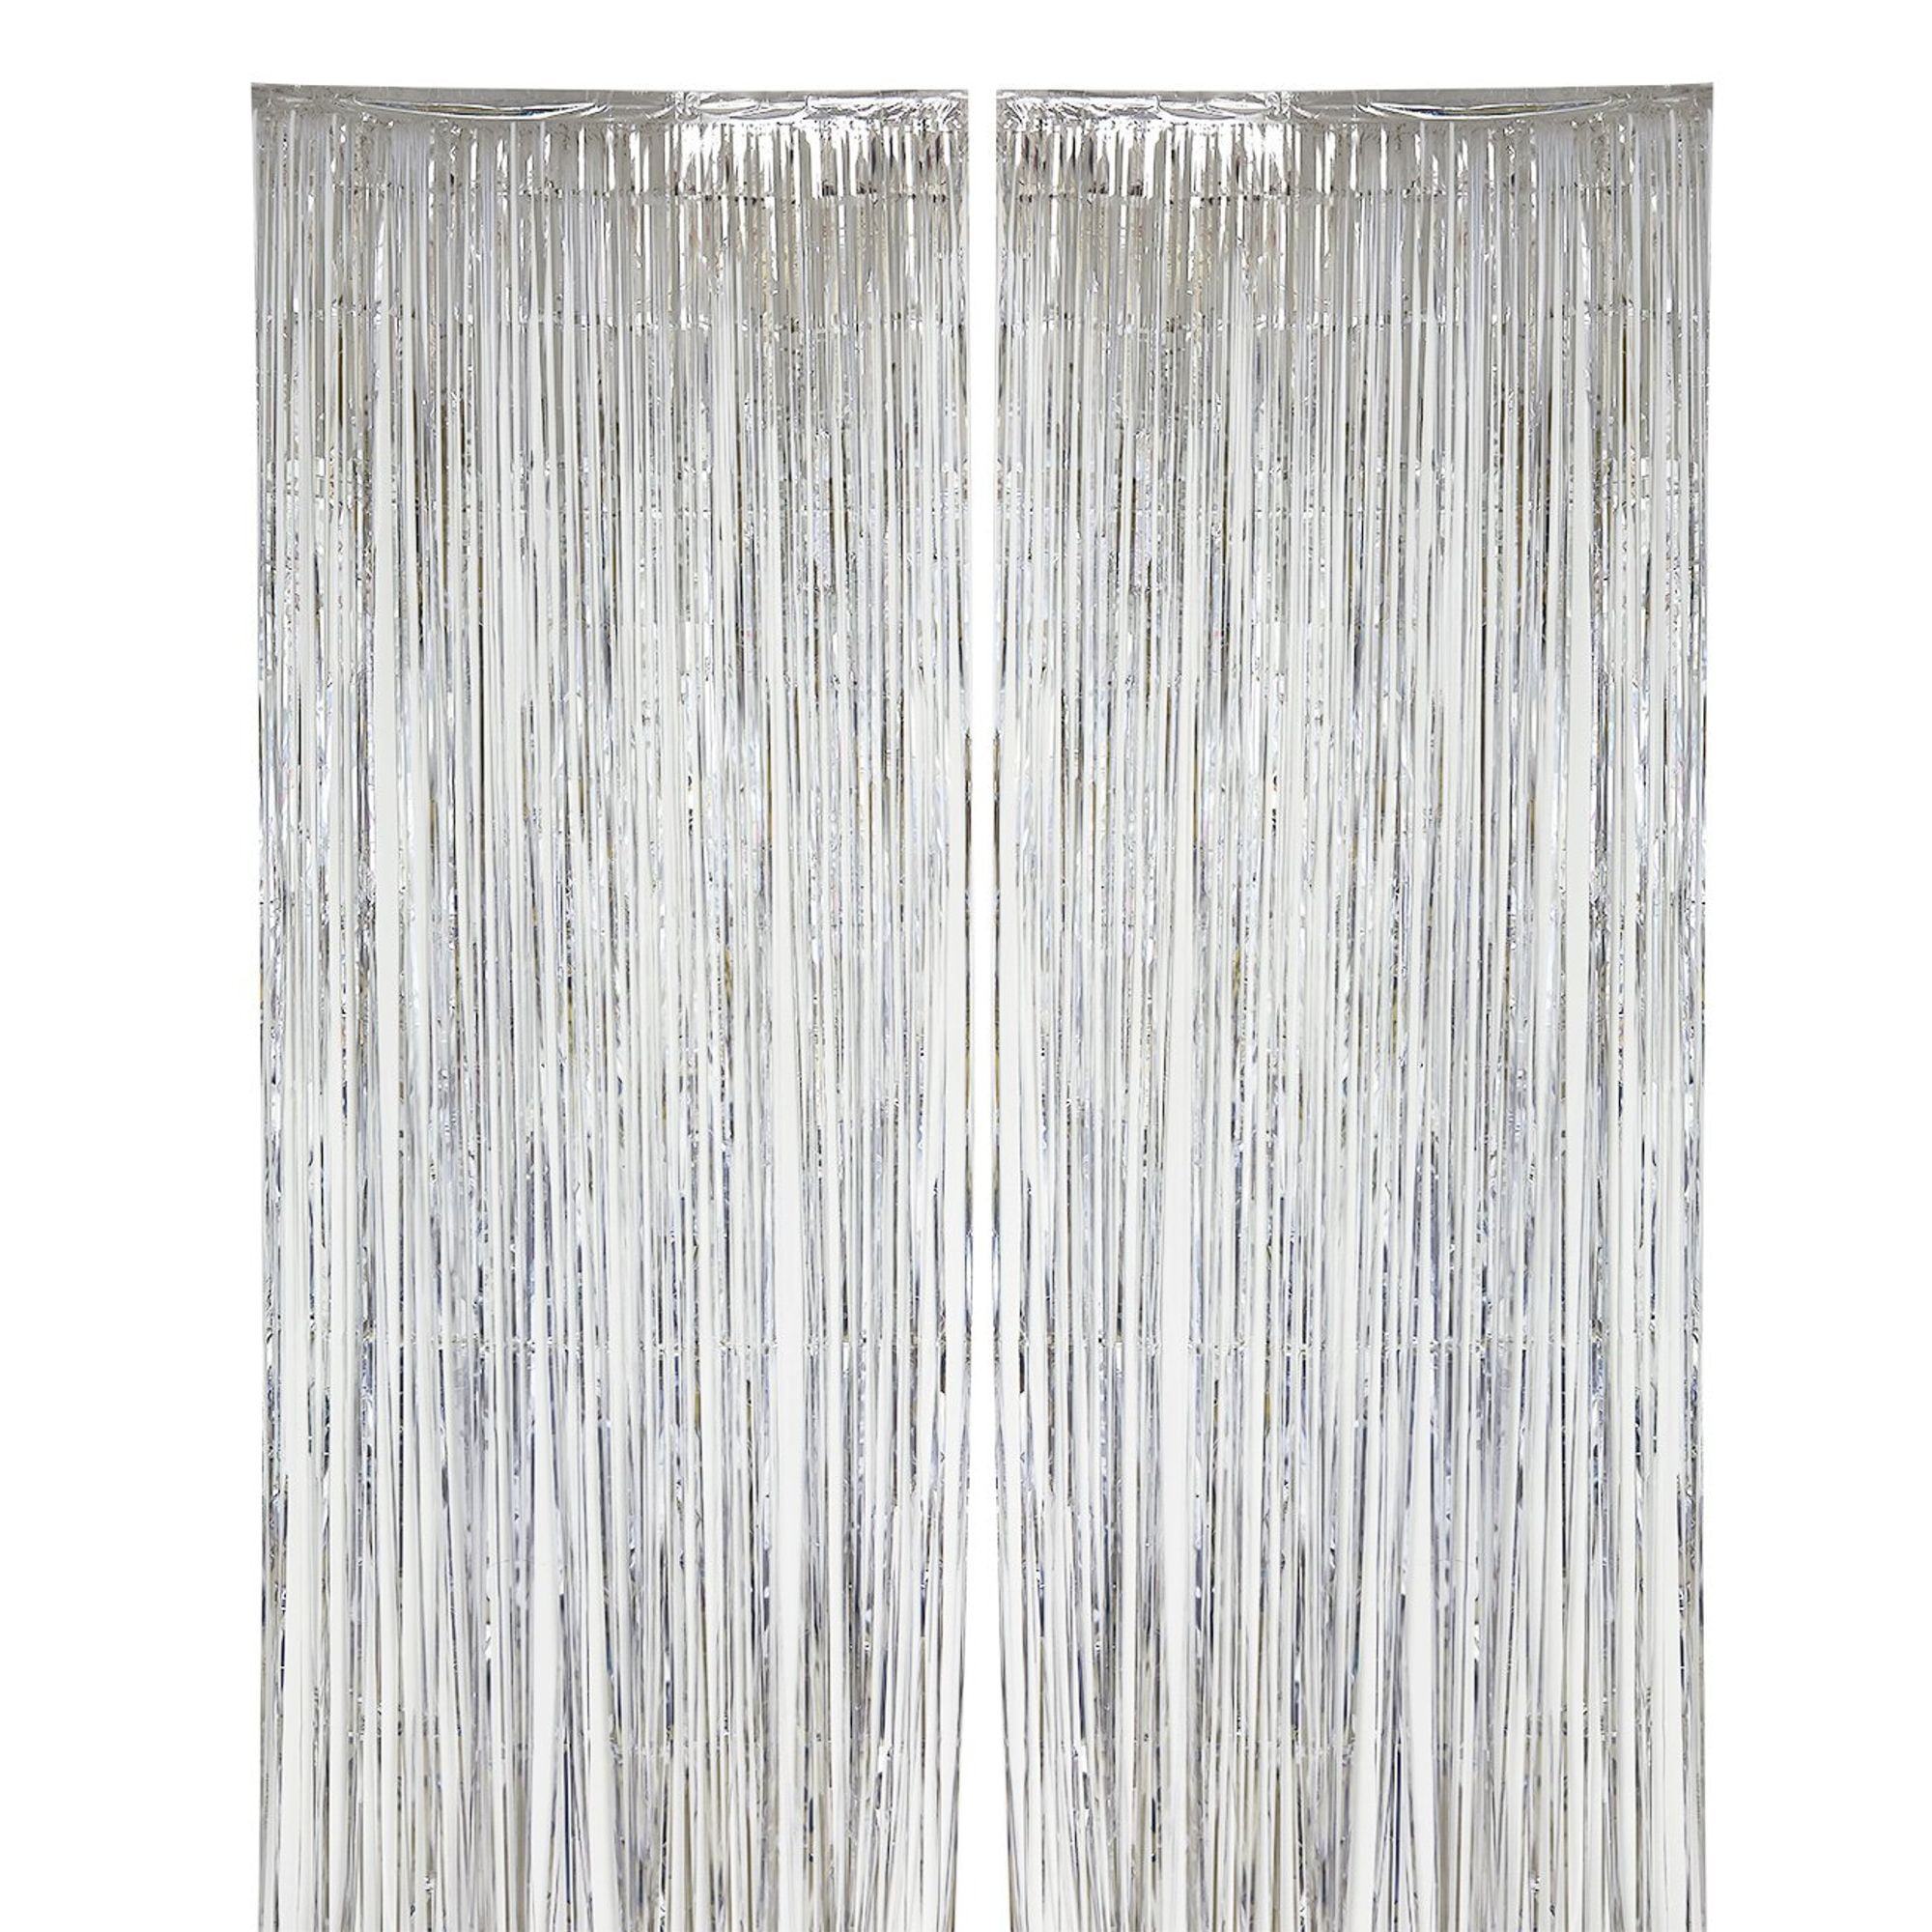 4 Color Metallic Fringe Curtain Party Foil Tinsel Rooms Decors 3' x 8' Wholesale 